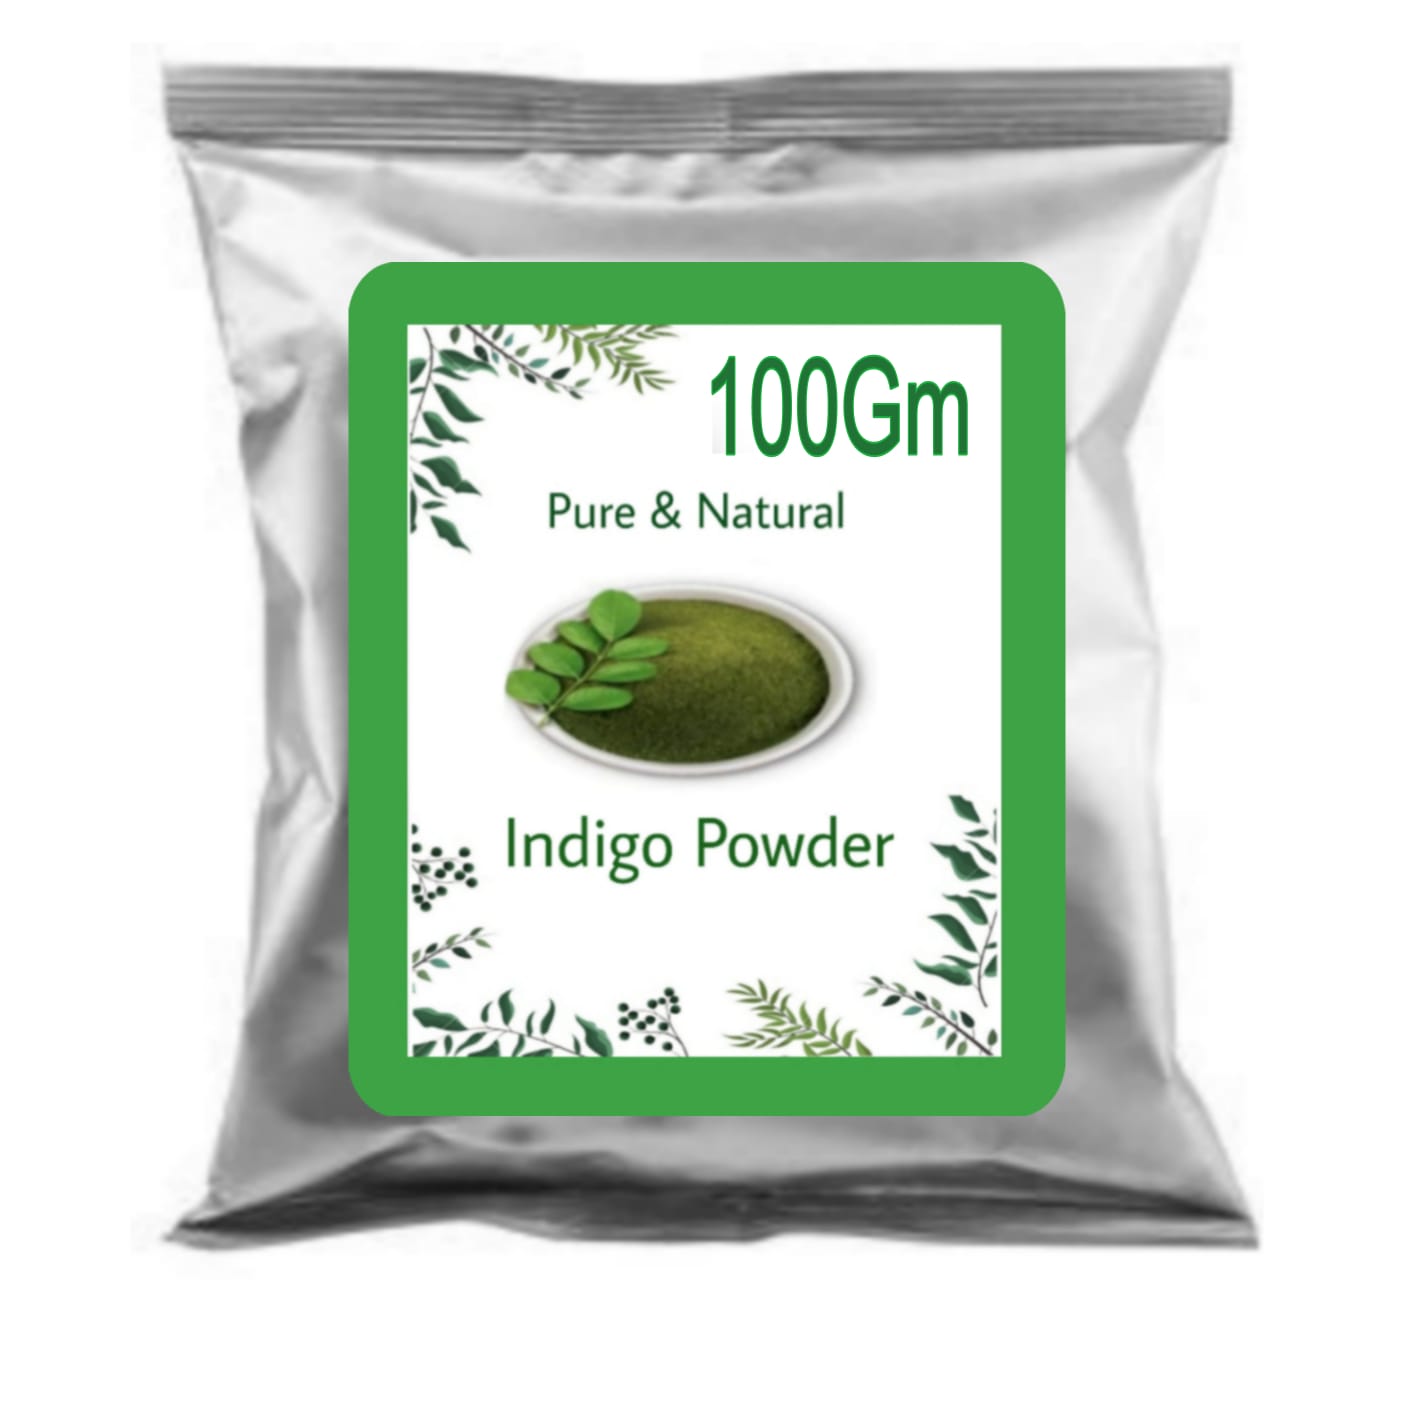 SDF INDIA Indigo Powder (Indigofera Tinctoria) Organic For Hair Pure Neel Powder For Natural Hair Colorant Black/Brown Hair & Beard Dye/Color (100Grm)